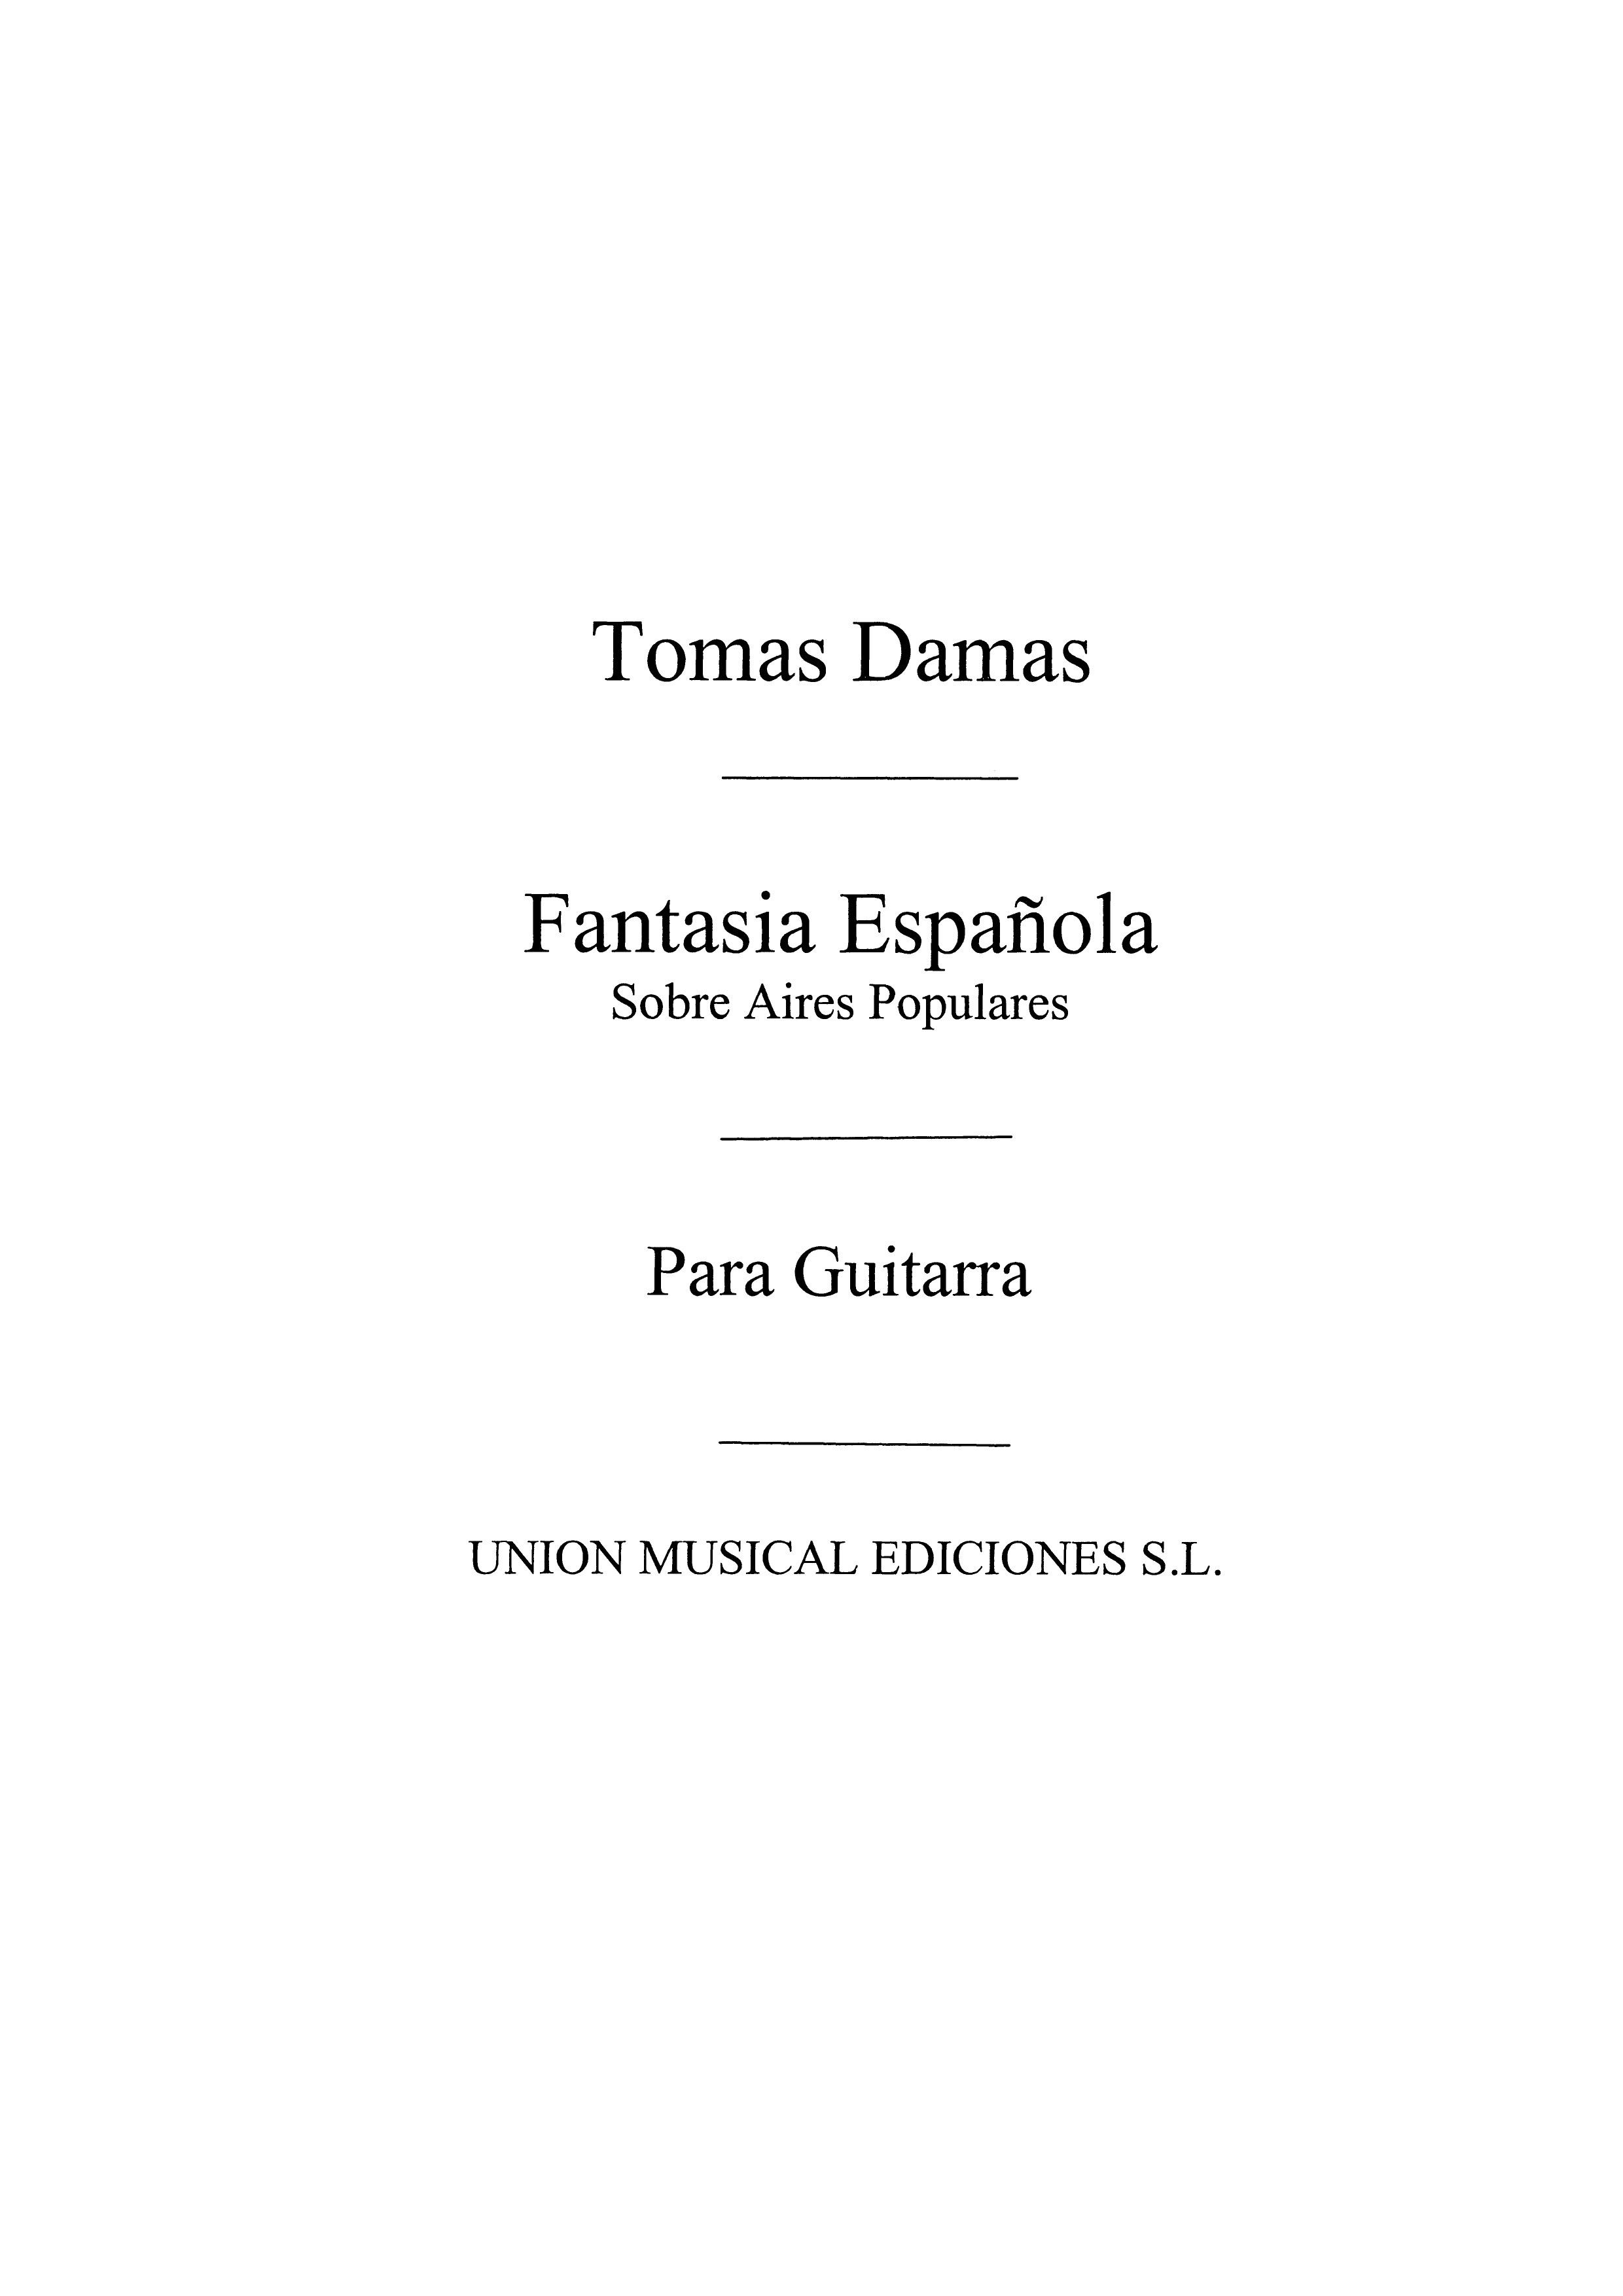 Tomas Damas: Fantasia Espanola Sobre Aires Popurales: Guitar: Instrumental Work